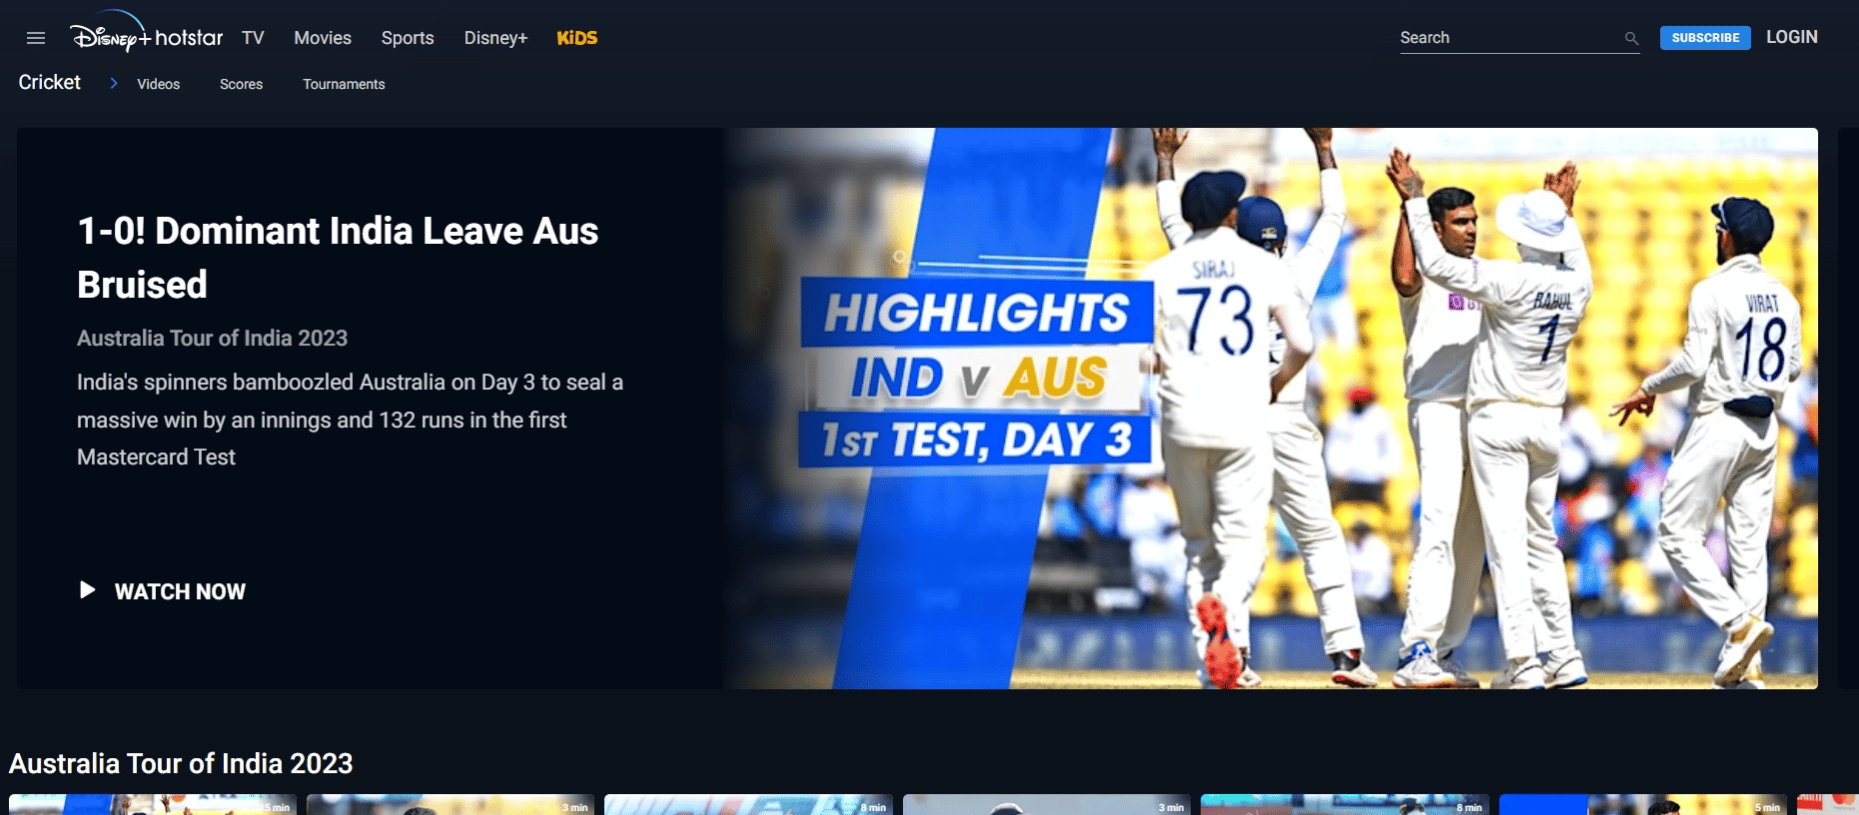 Star sports app screenshot